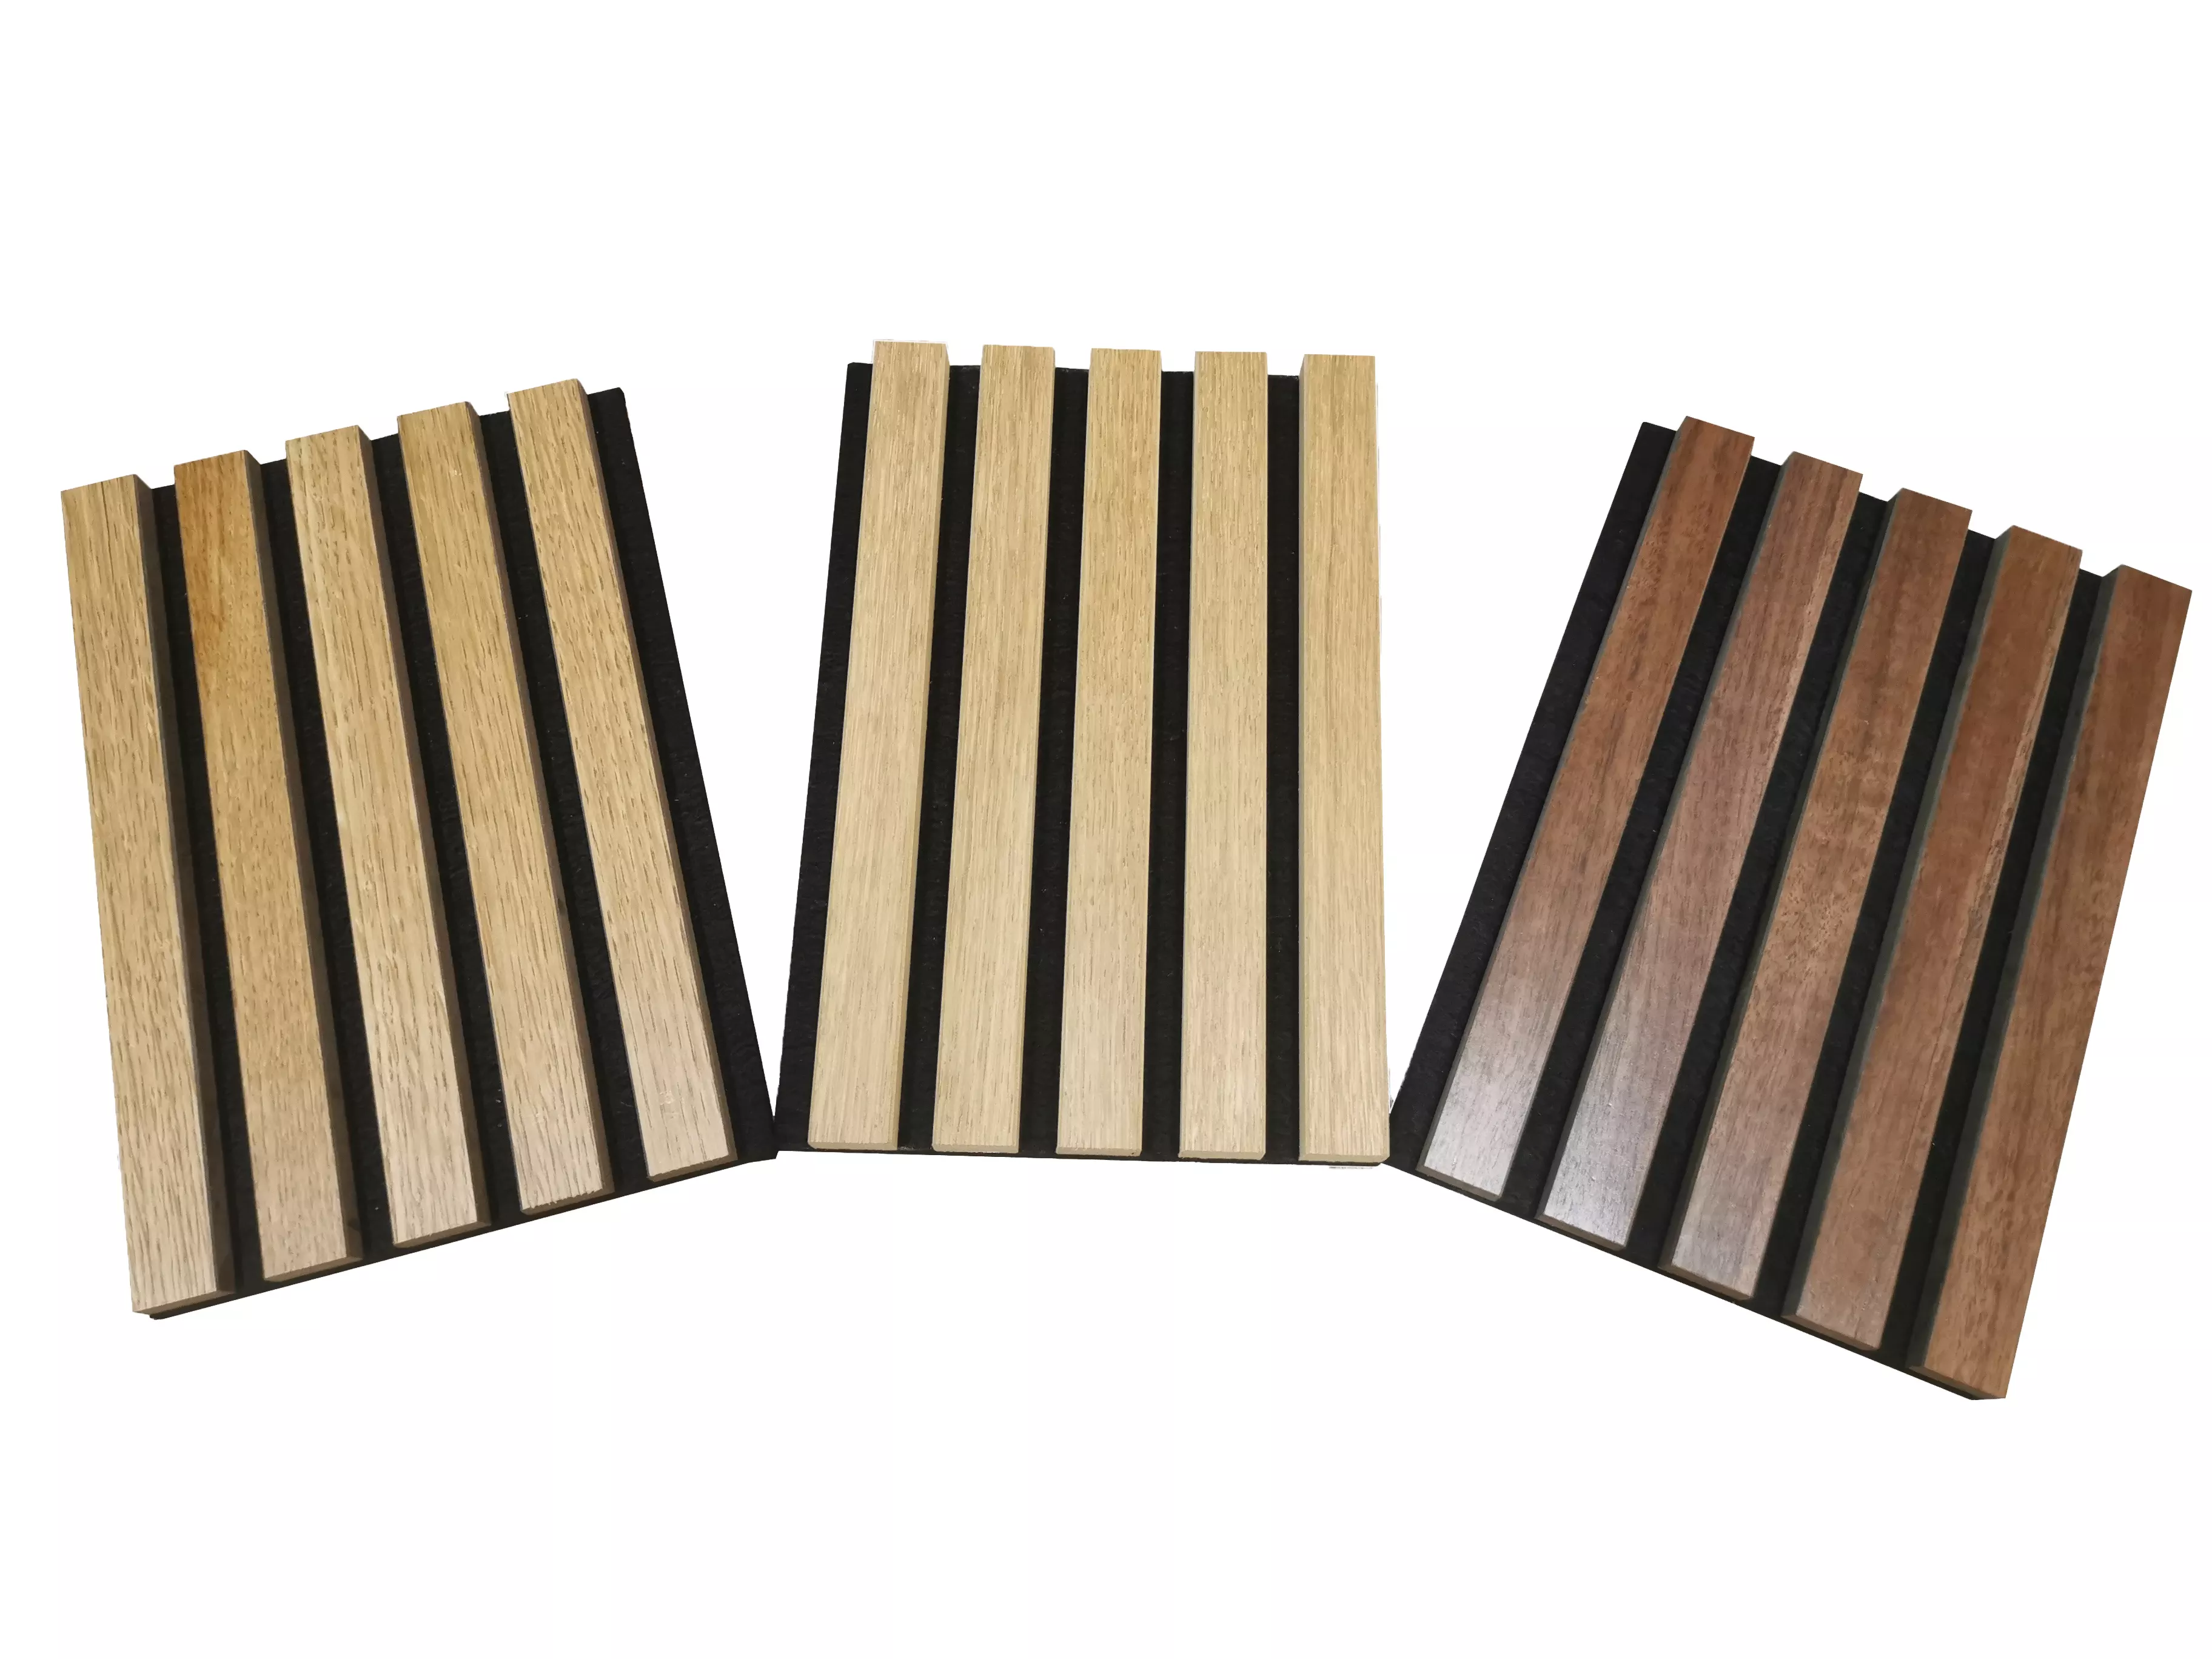 Wooden acoustic panels  Sound dampening panels - WoodUpp